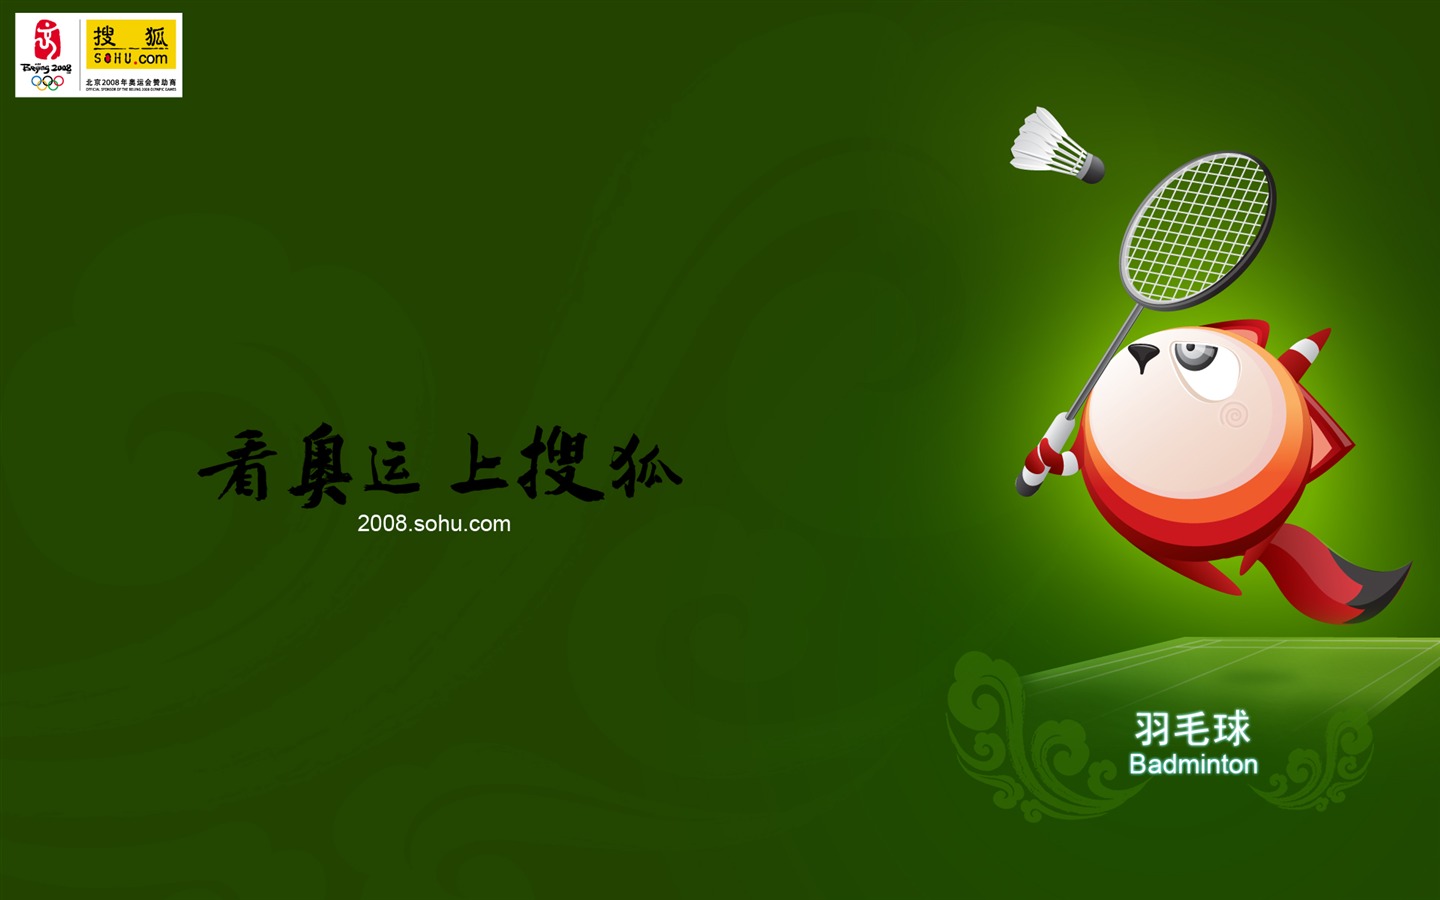 Sohu Olympic sports style wallpaper #21 - 1440x900